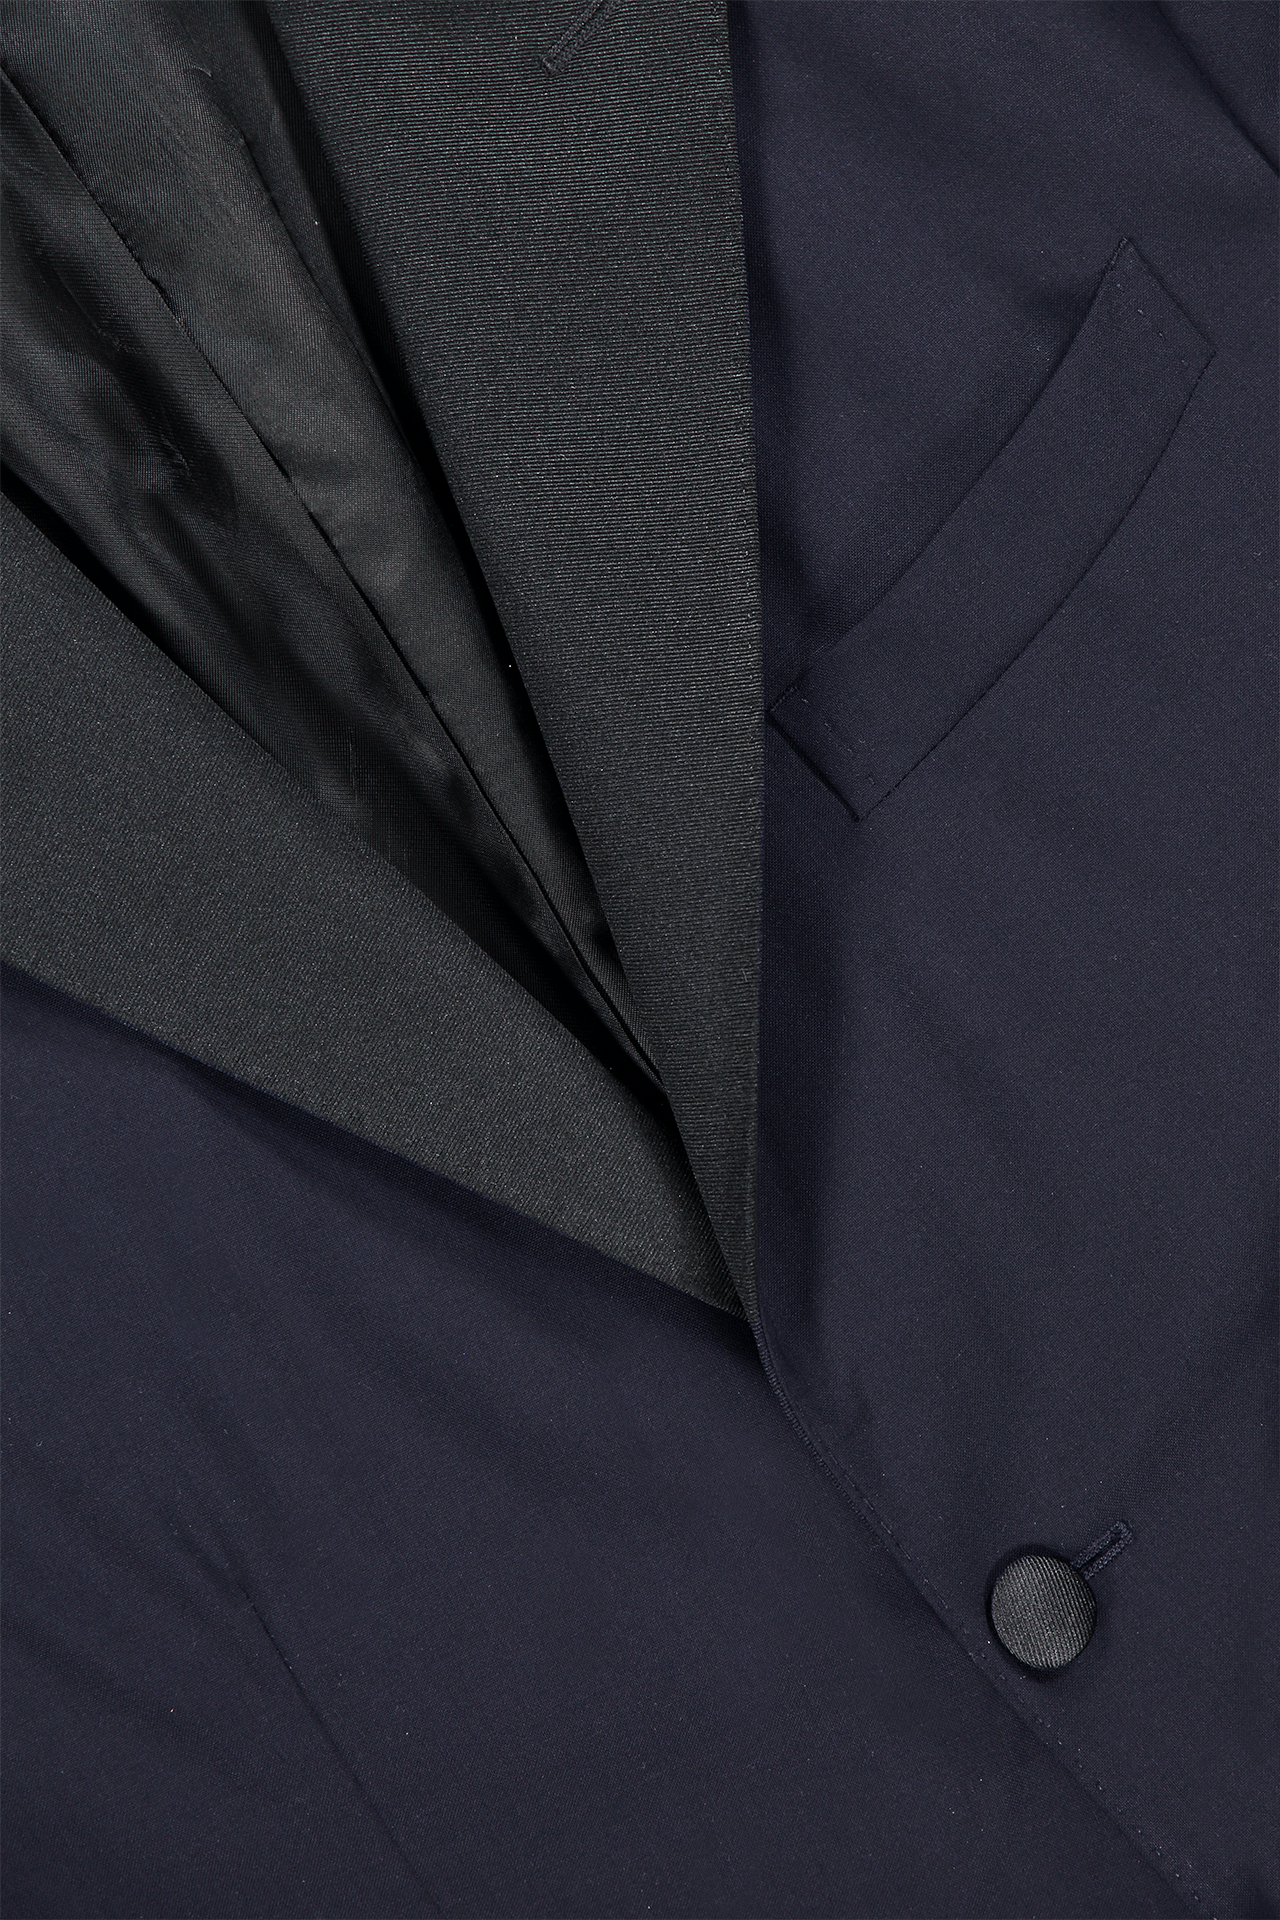 Dark blue 100% virgin wool tuxedo K-Jacket suit in Dark blue color